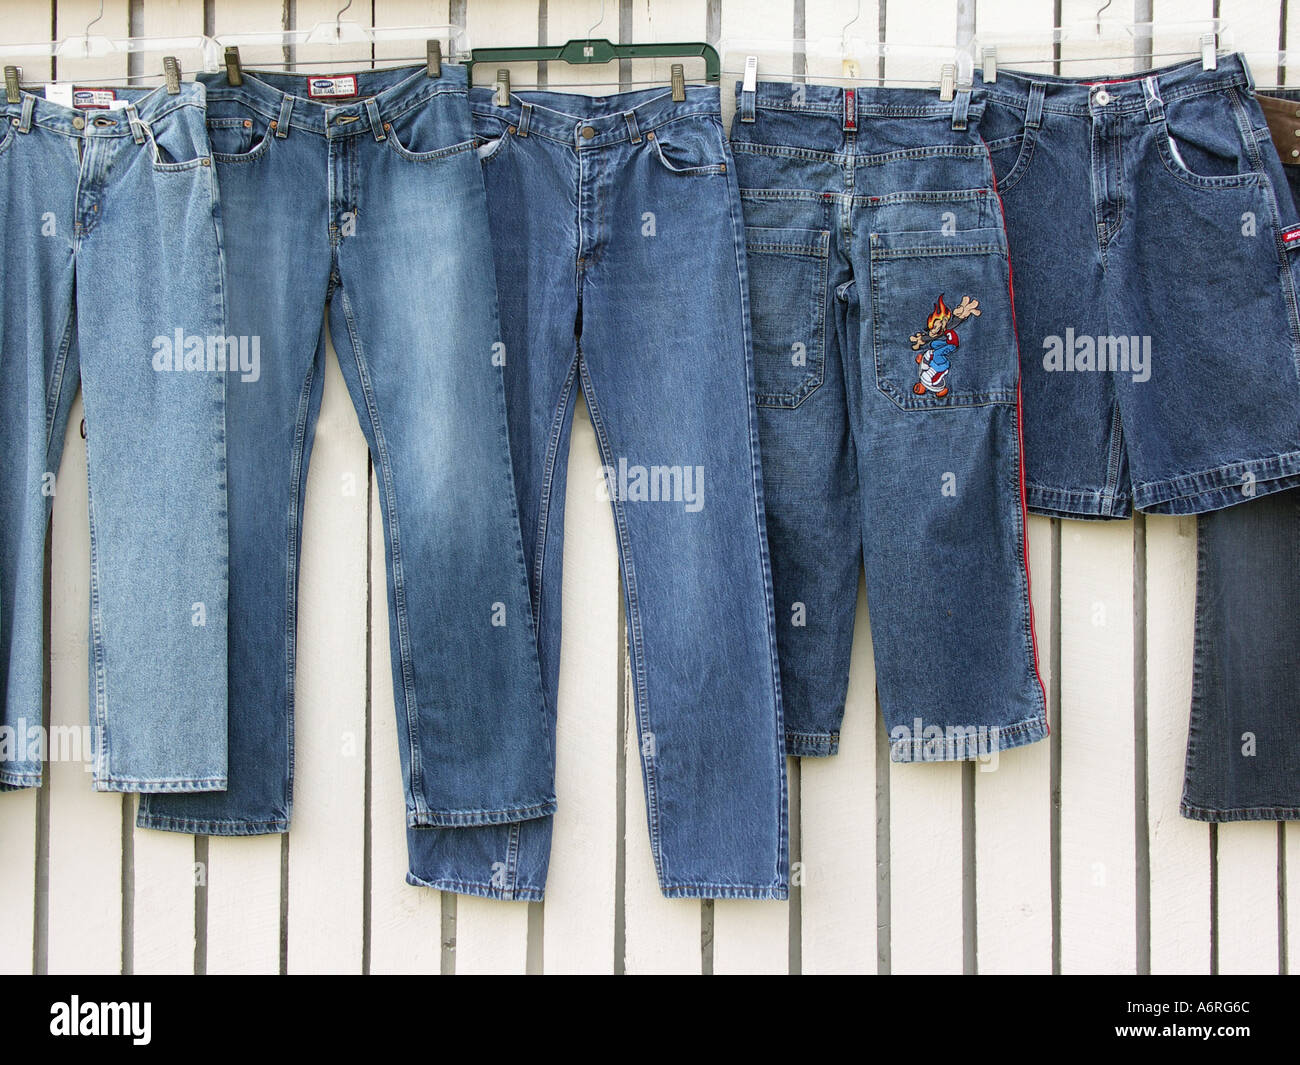 Pants hanging on Wall Stock Photo